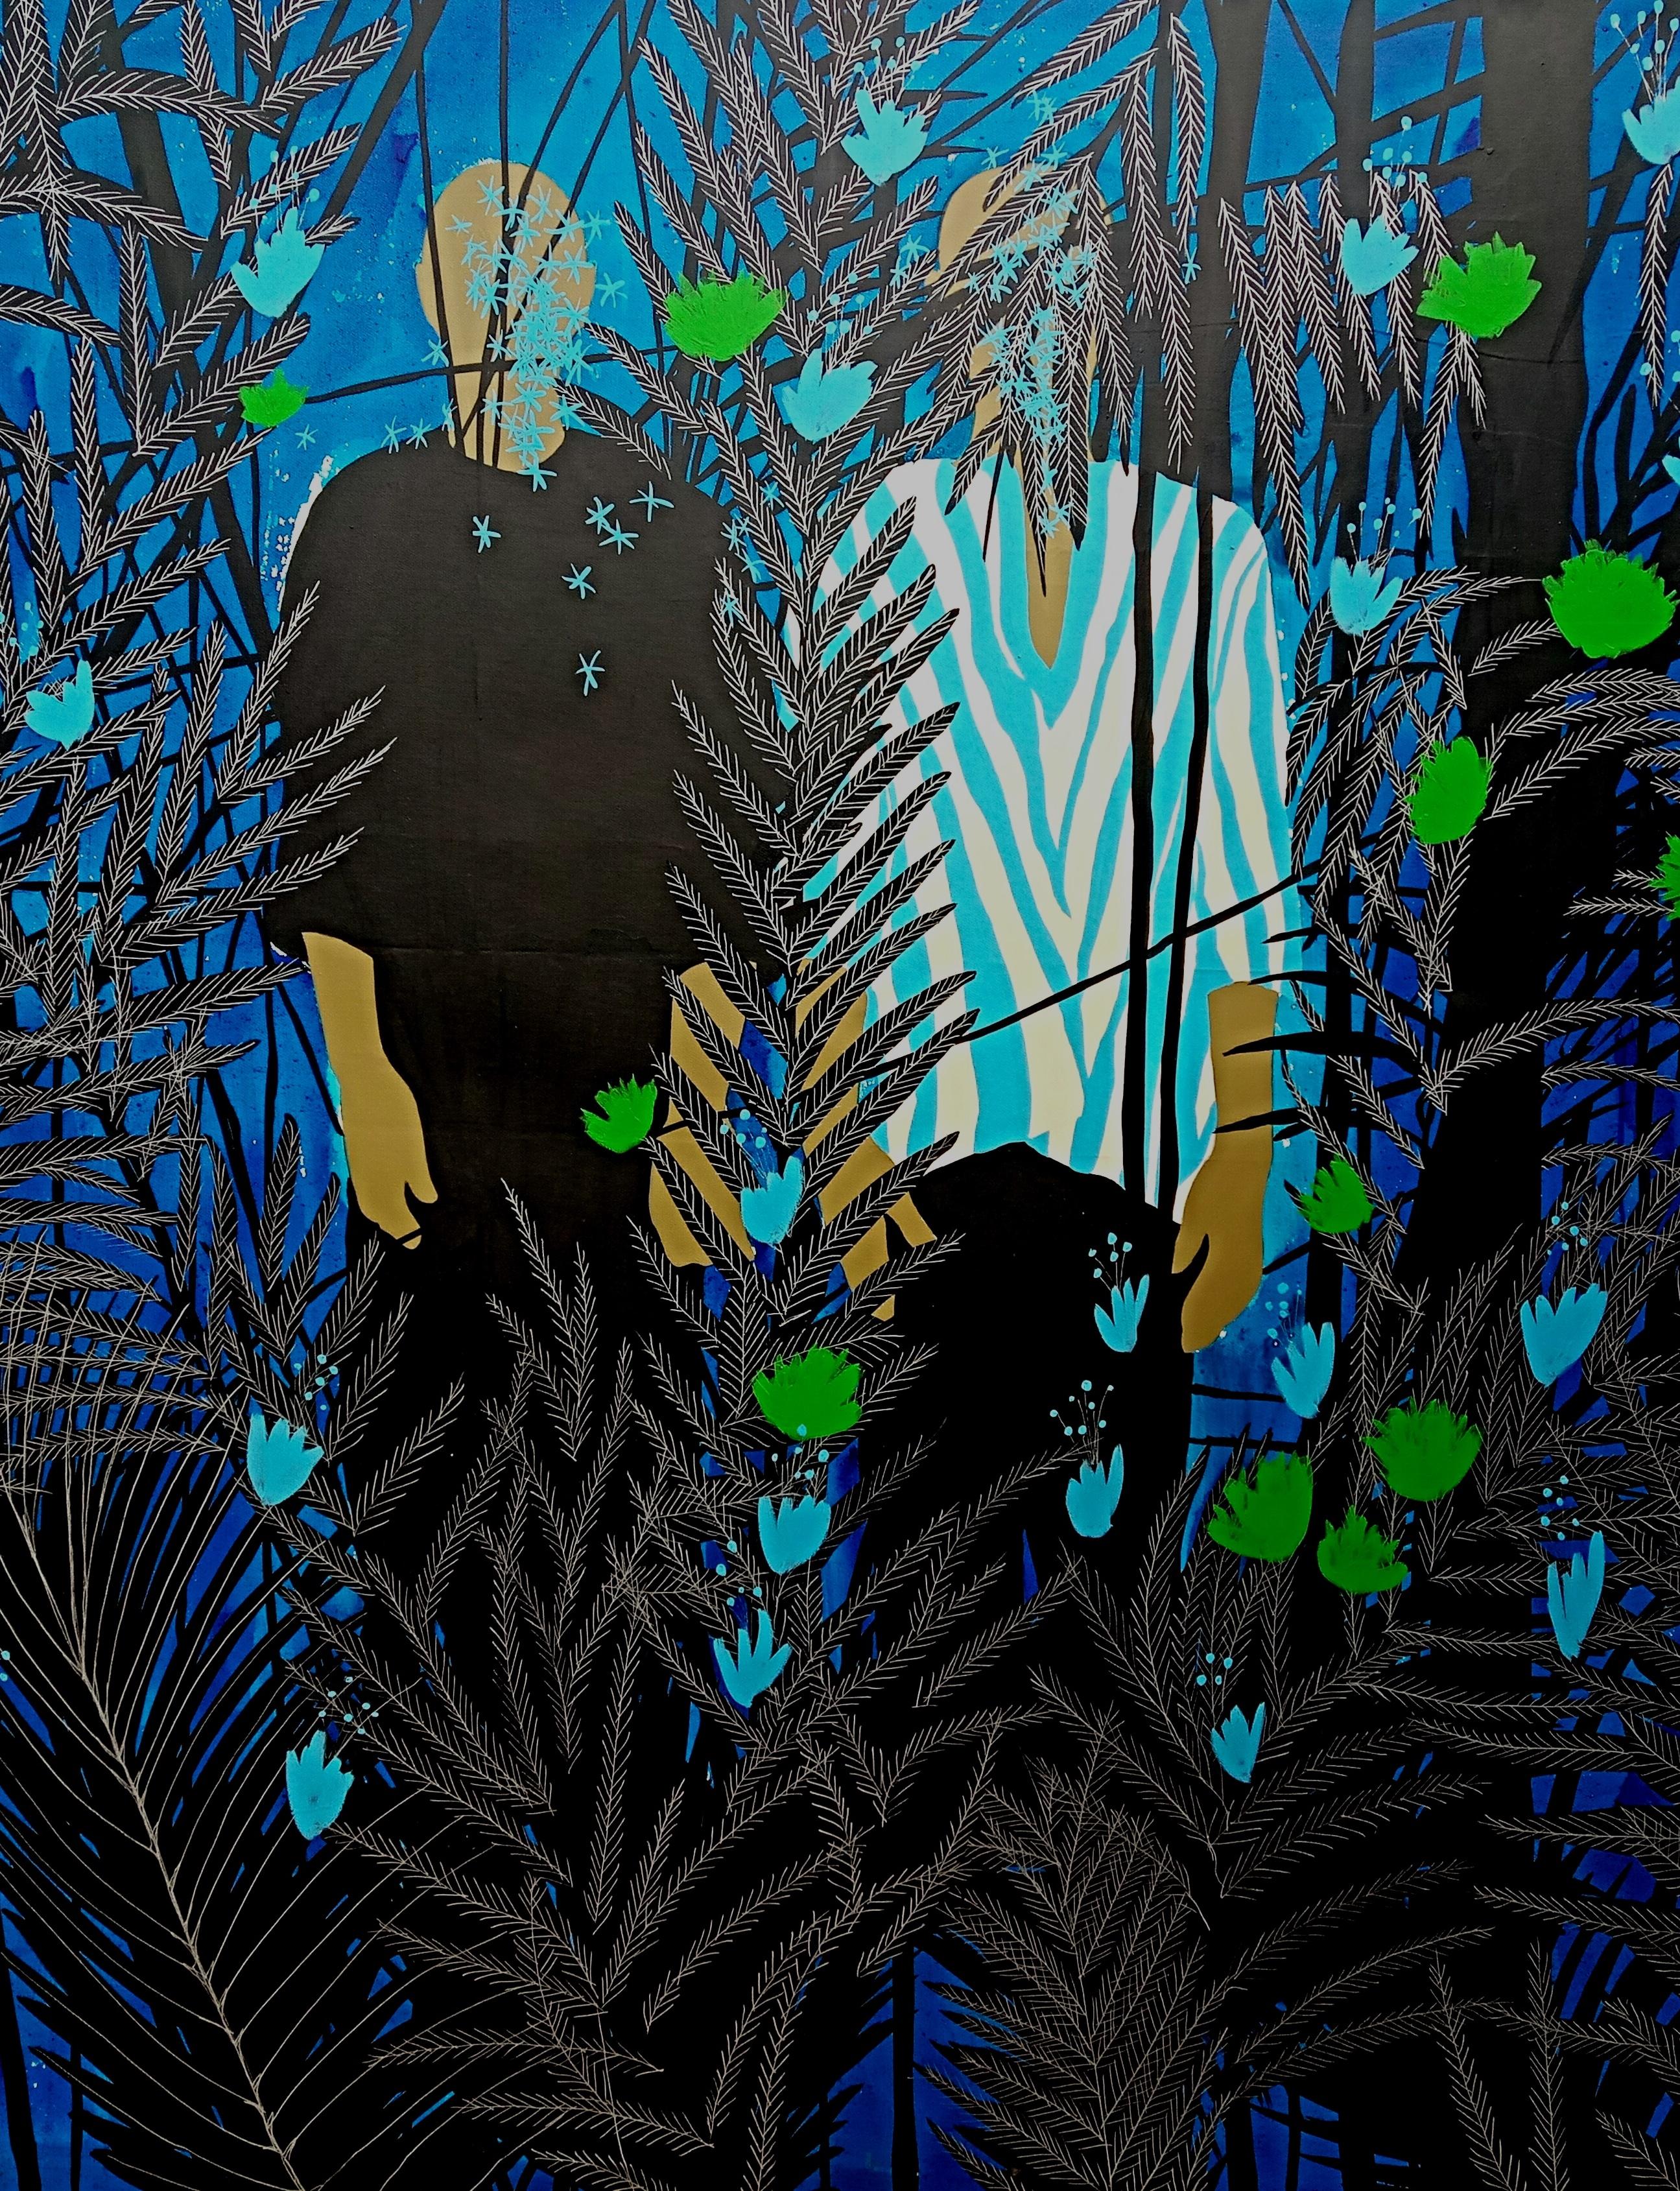 The jungle - Moustapha Baïdi Oumarou, 21st Century, African painting 1